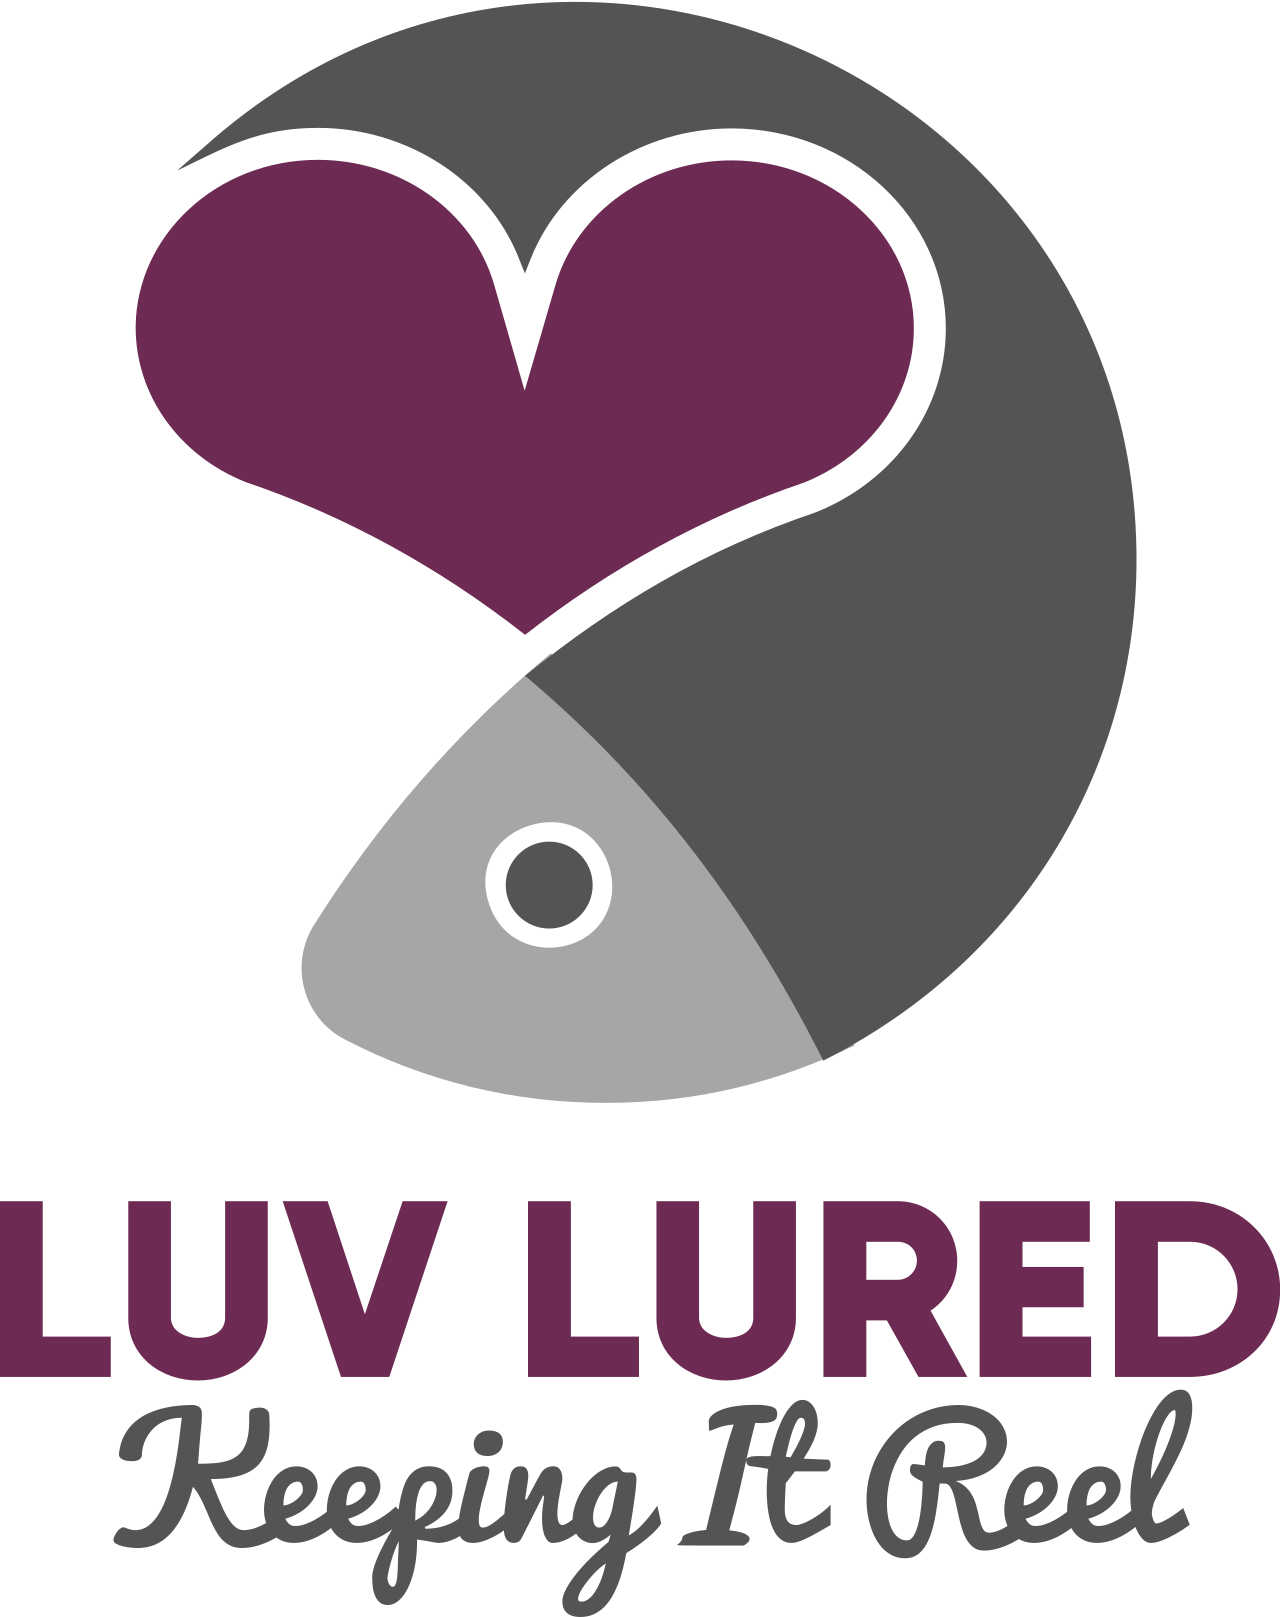 luv lured's logo